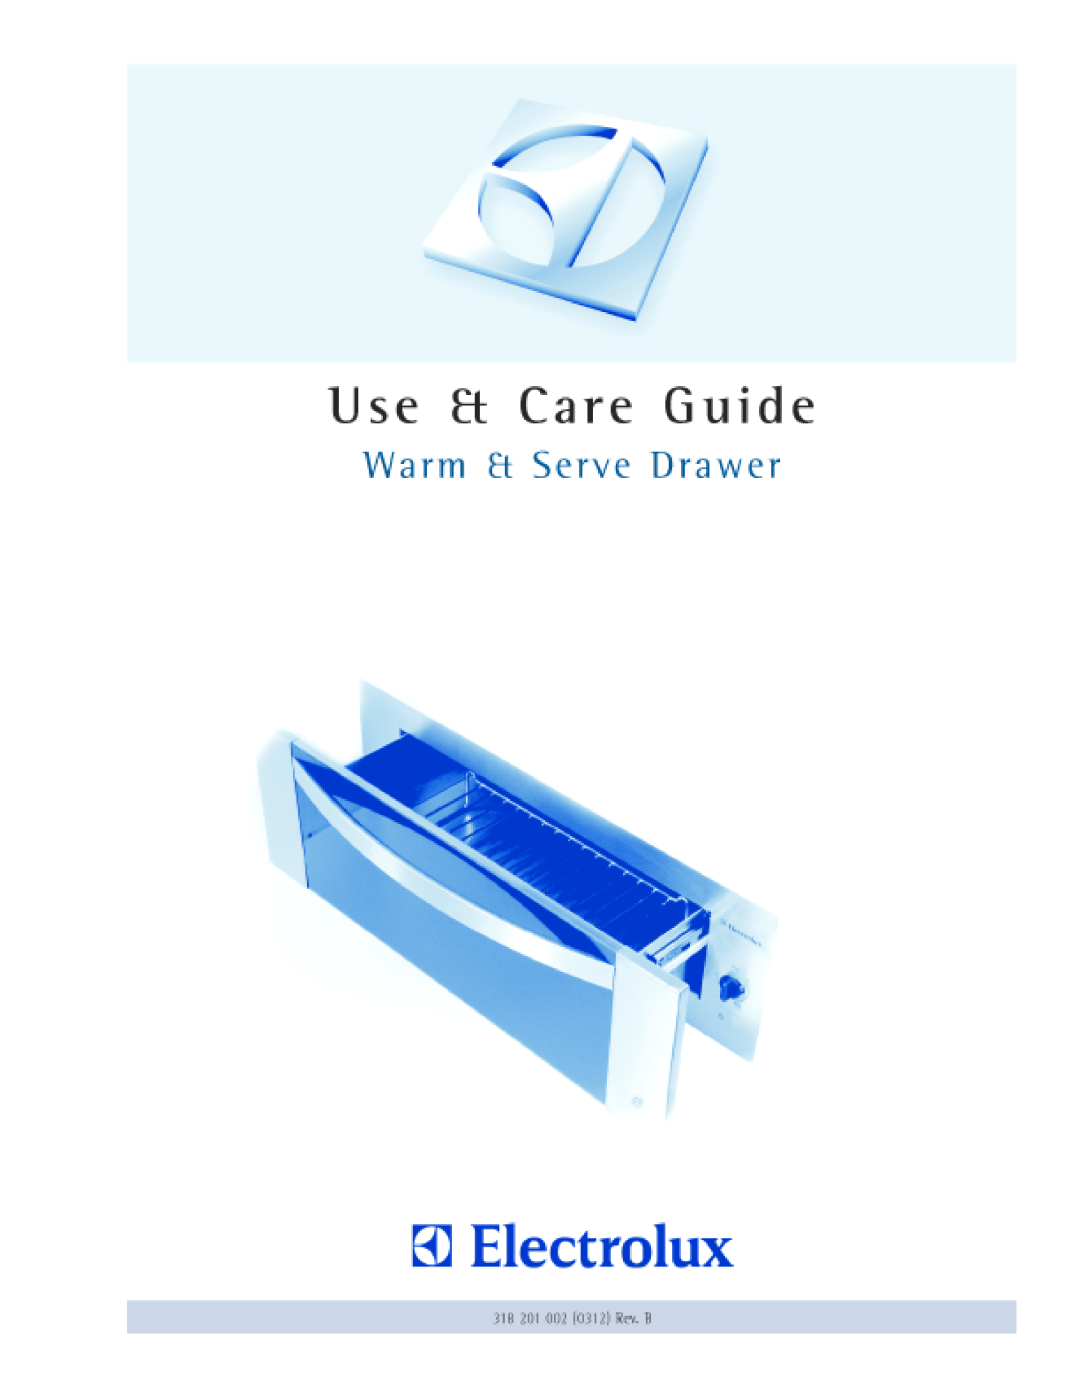 Electrolux Warm & Serve Drawer manual 